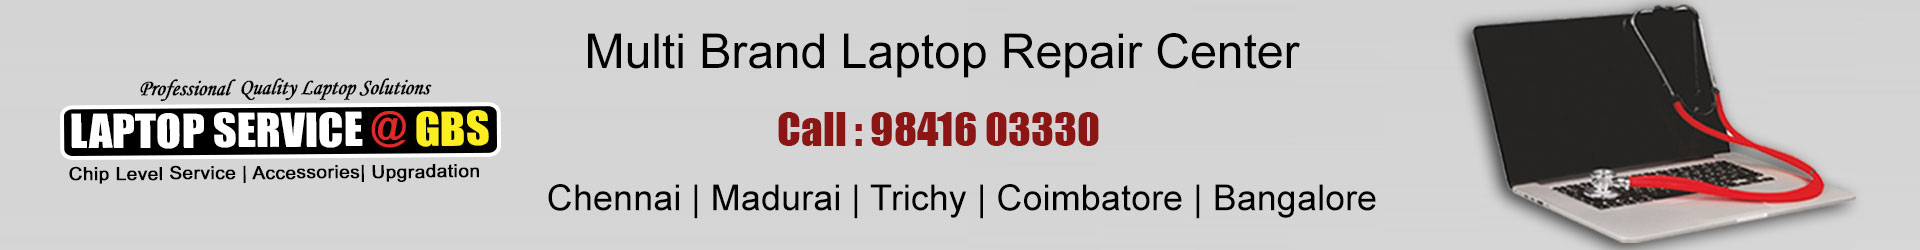 laptop service center in omr